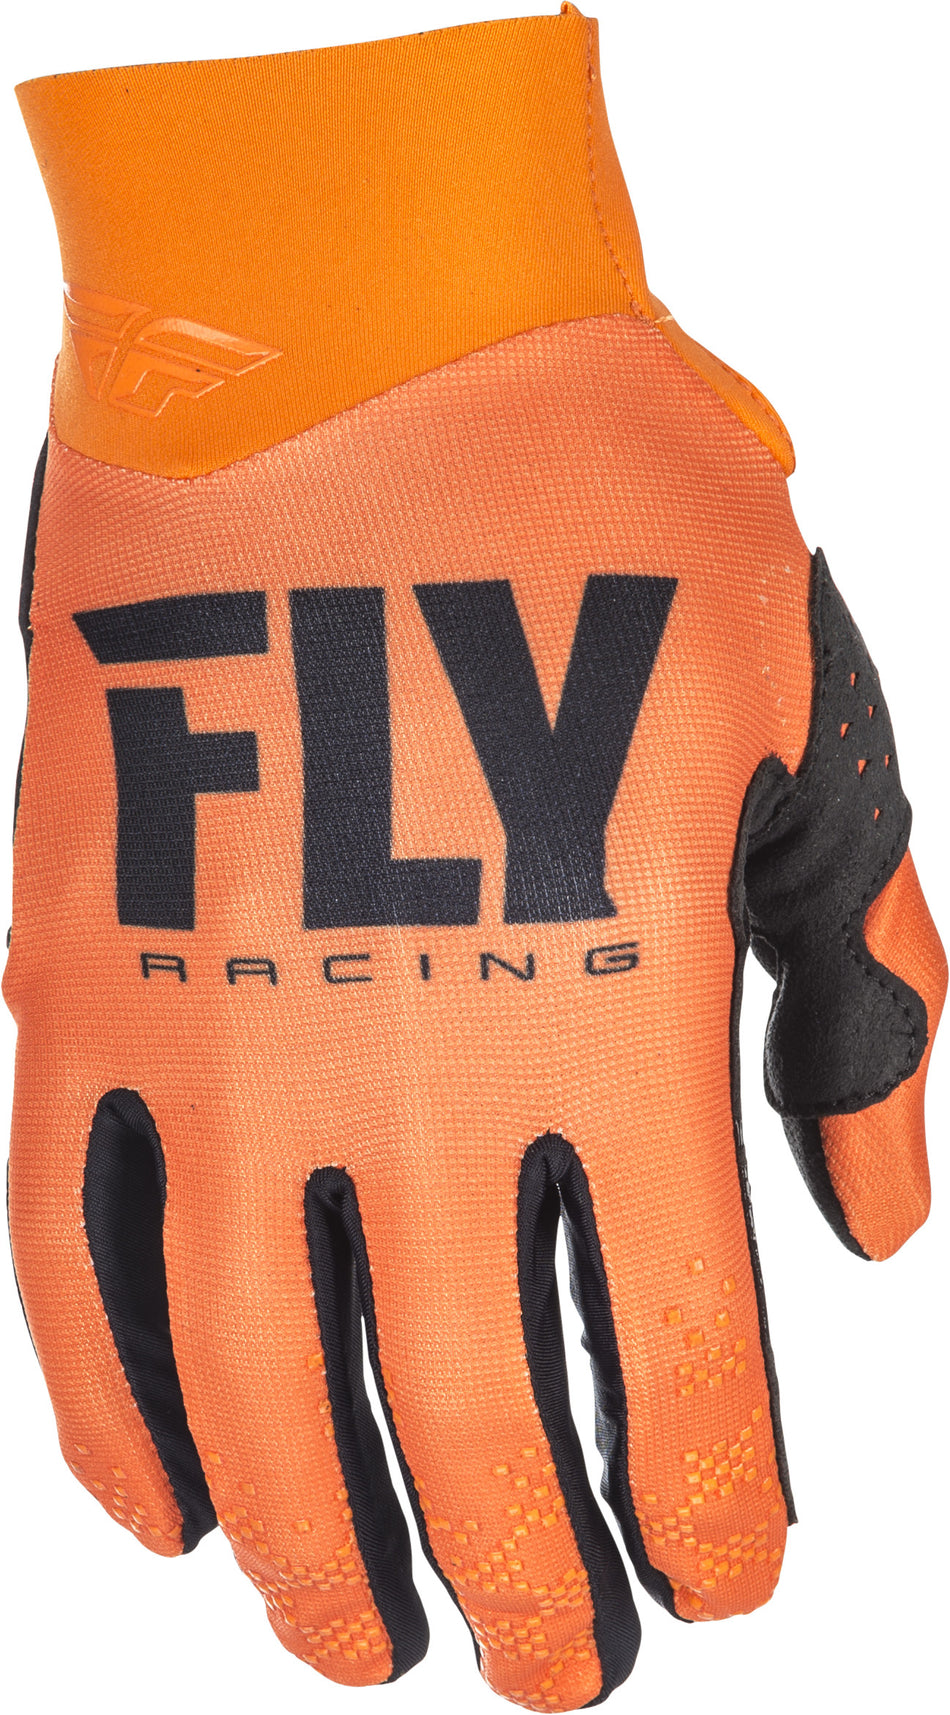 FLY RACING Pro Lite Gloves Orange Sz 6 371-81806